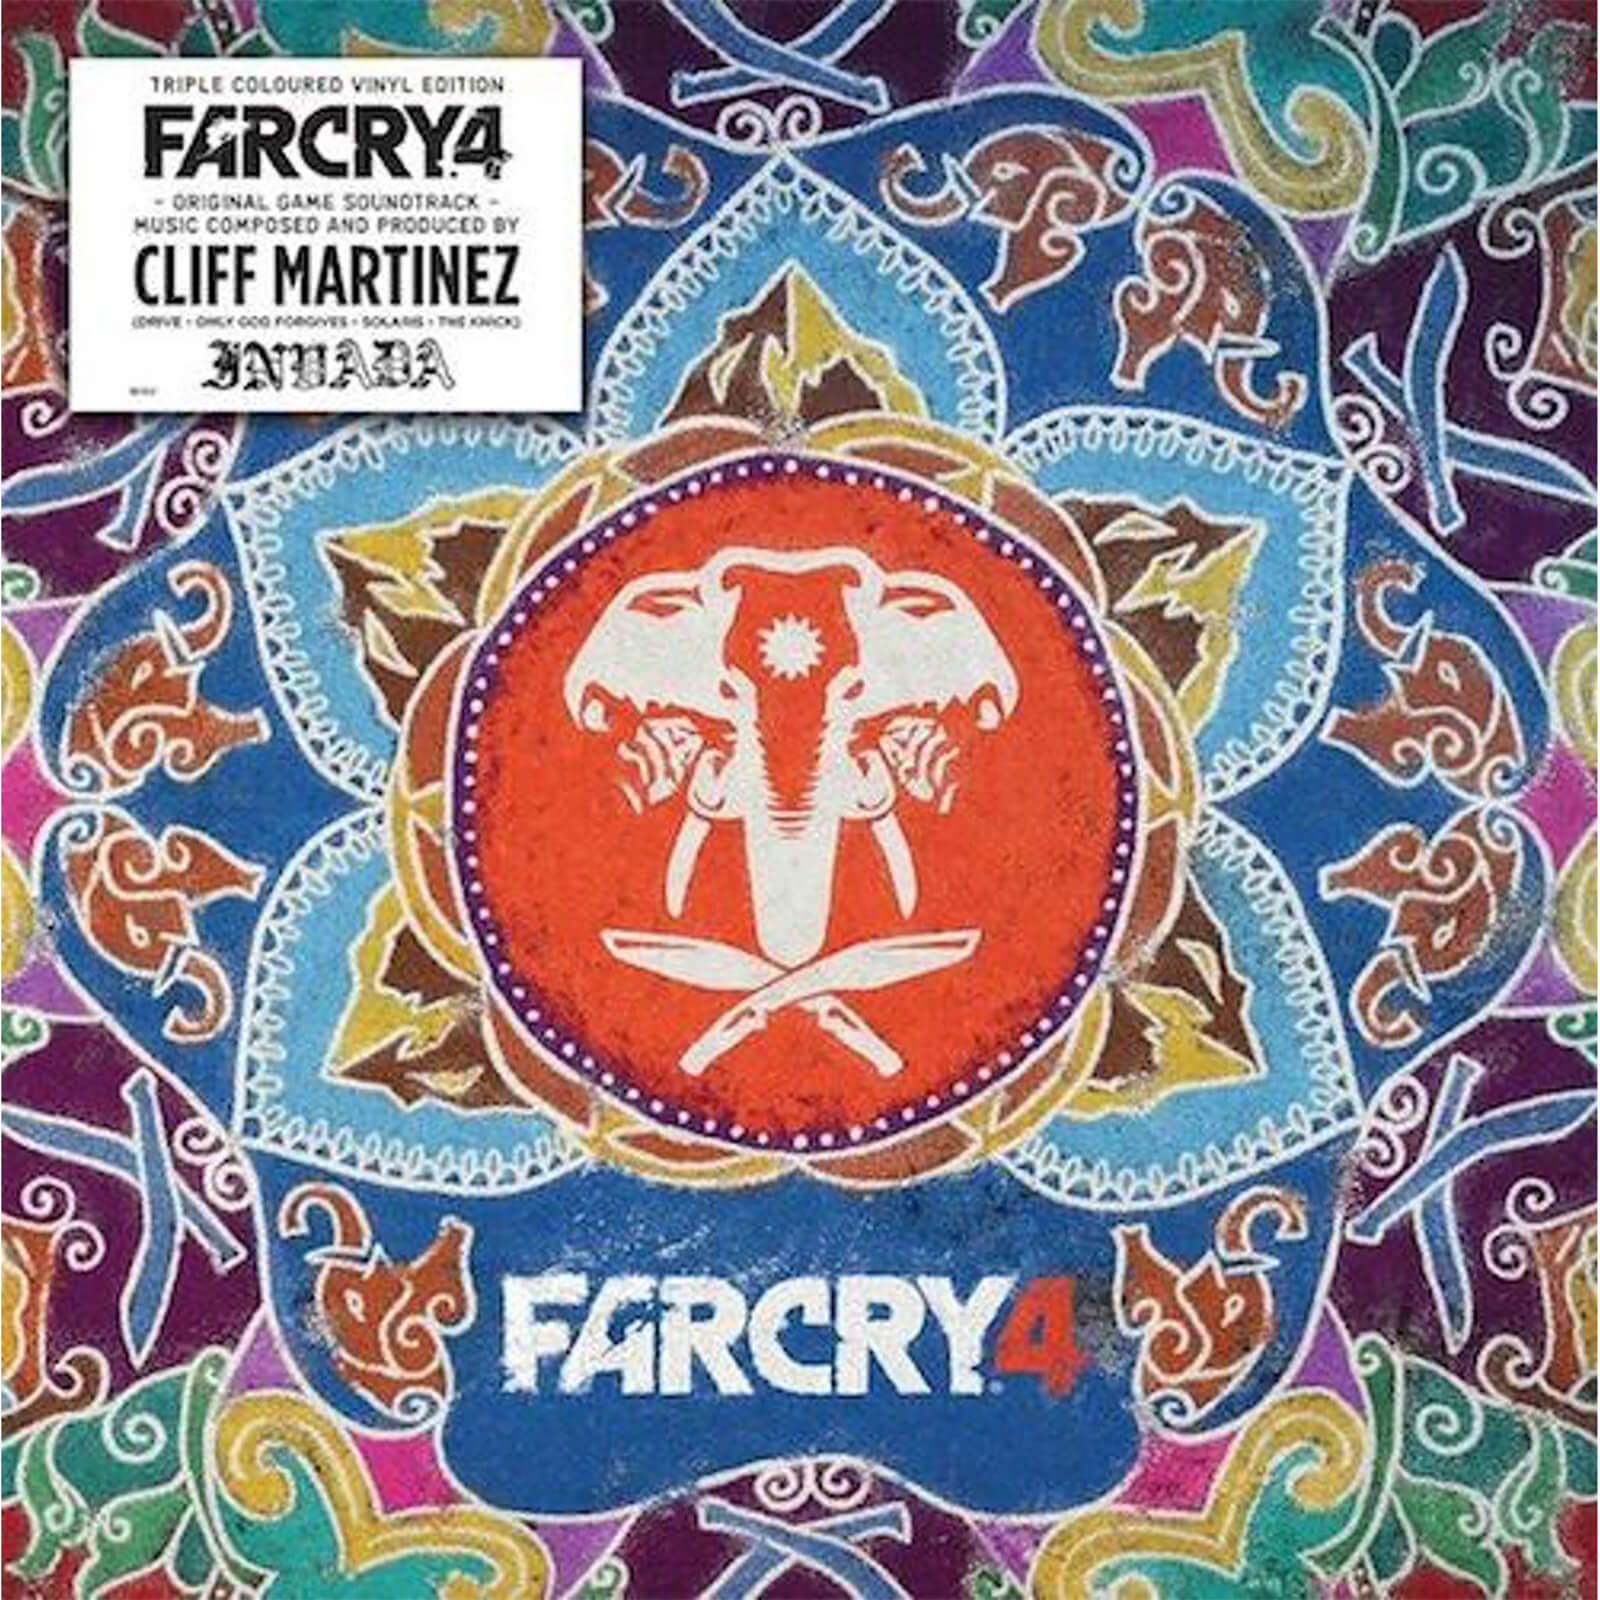 Further ost. Драйв Клифф Мартинес. Cliff Martinez far Cry 4 Soundtrack. Обложка фаркрай Original Soundtrack. Unfamiliar Paths Клифф Мартинес.